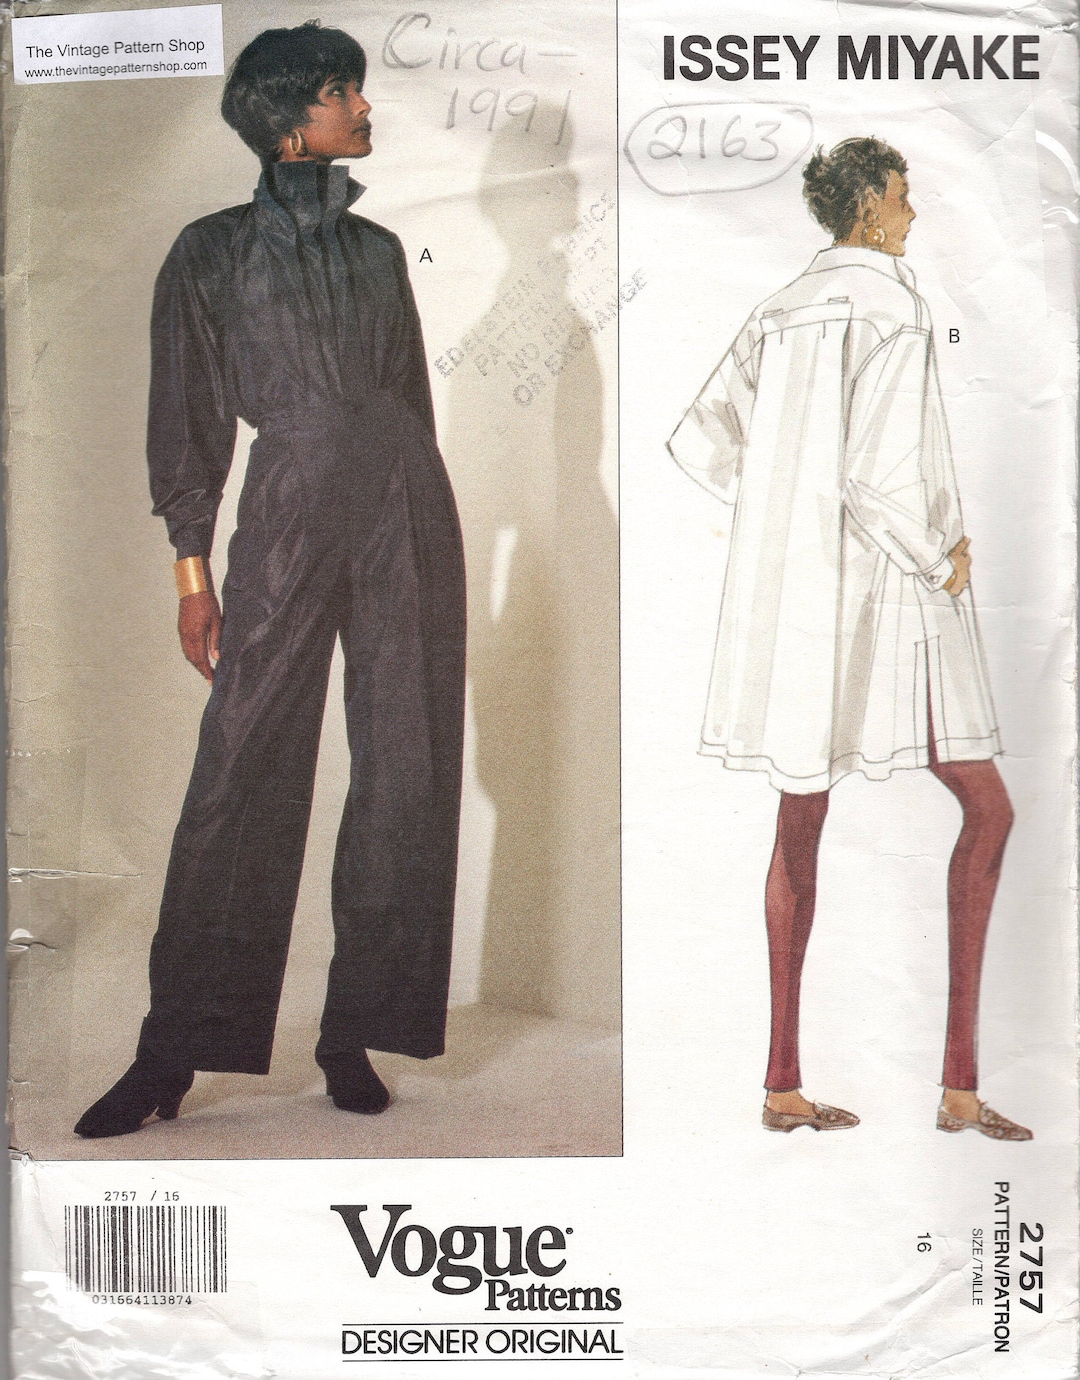 1991 Vintage VOGUE Sewing Pattern B38in Top Pants 2163 by Issey Miyake ...